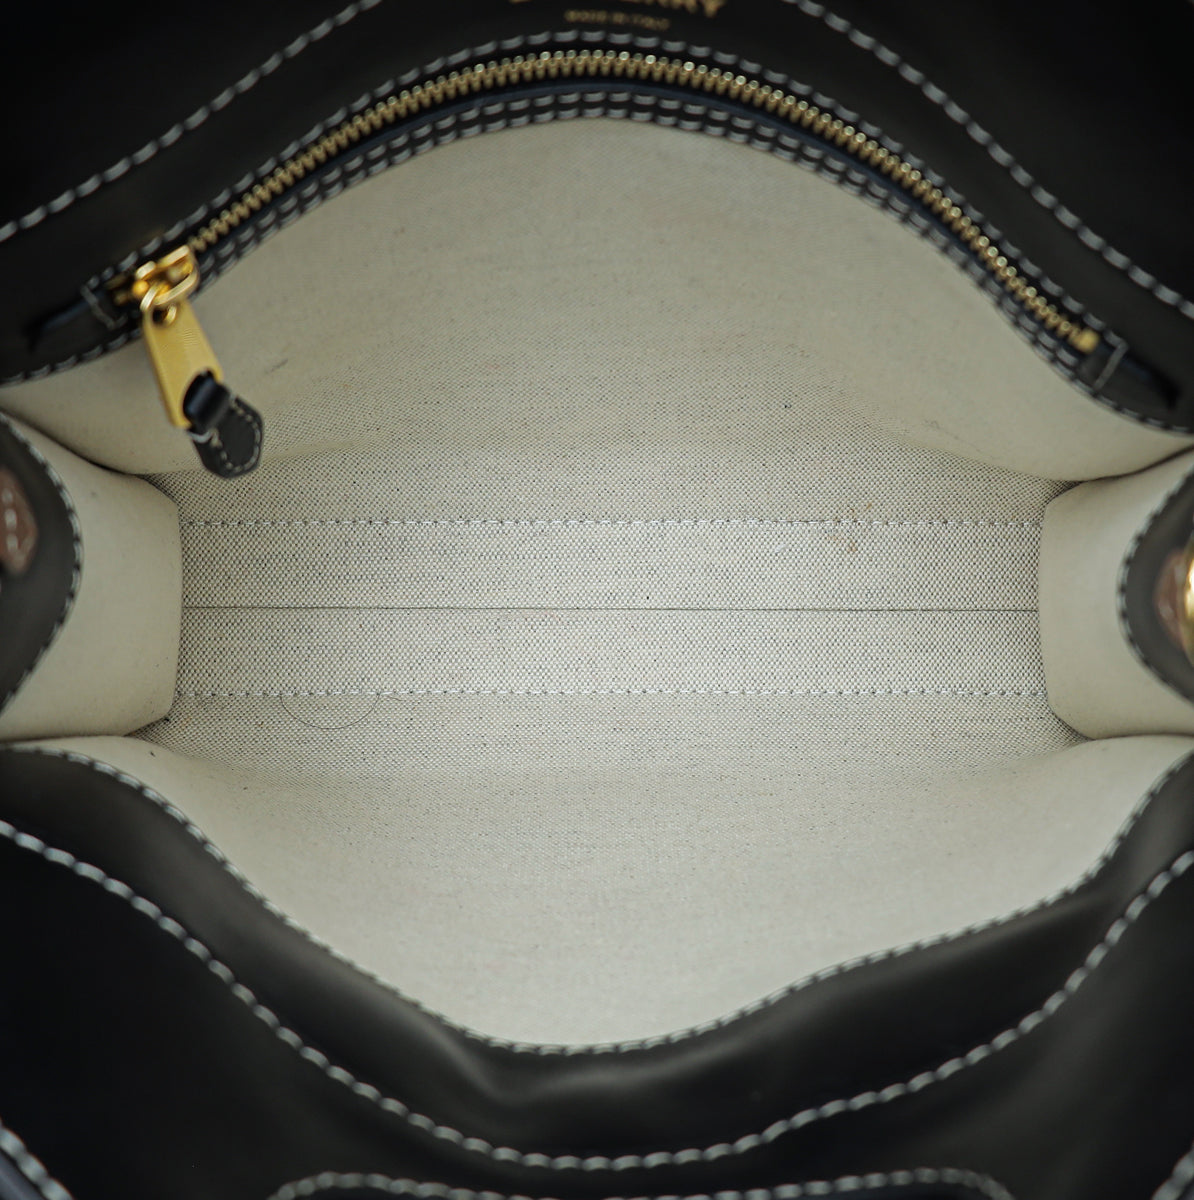 Burberry Tricolor Pocket Mini Bag